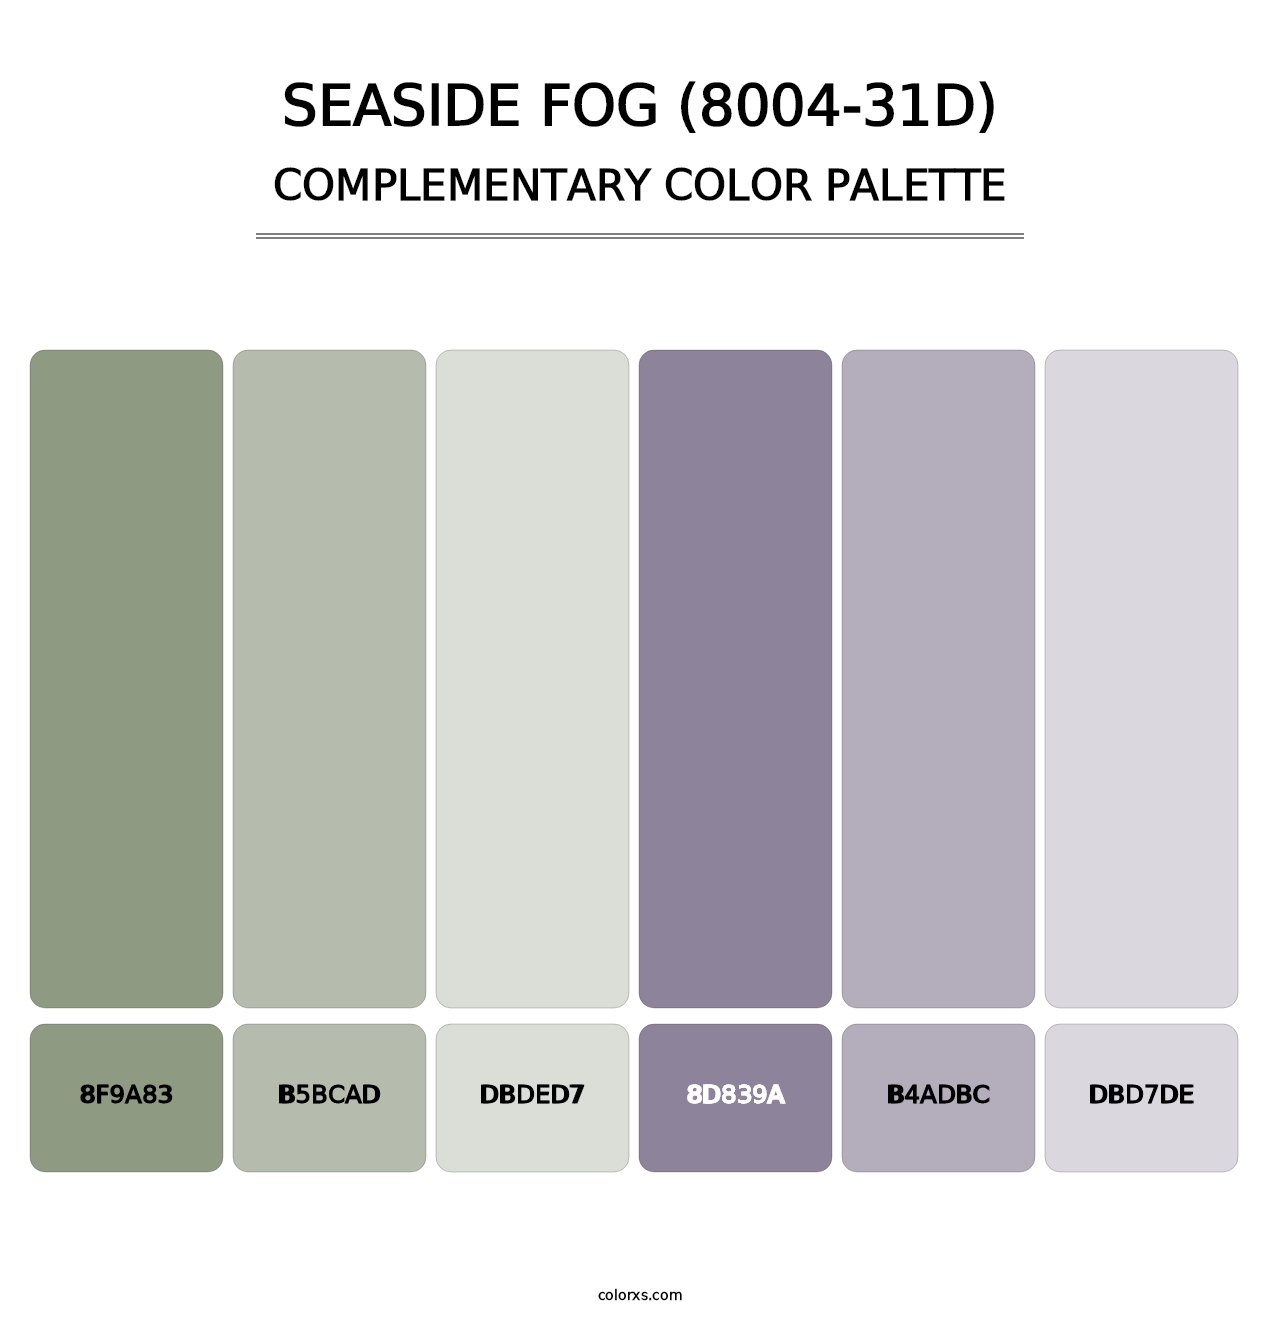 Seaside Fog (8004-31D) - Complementary Color Palette